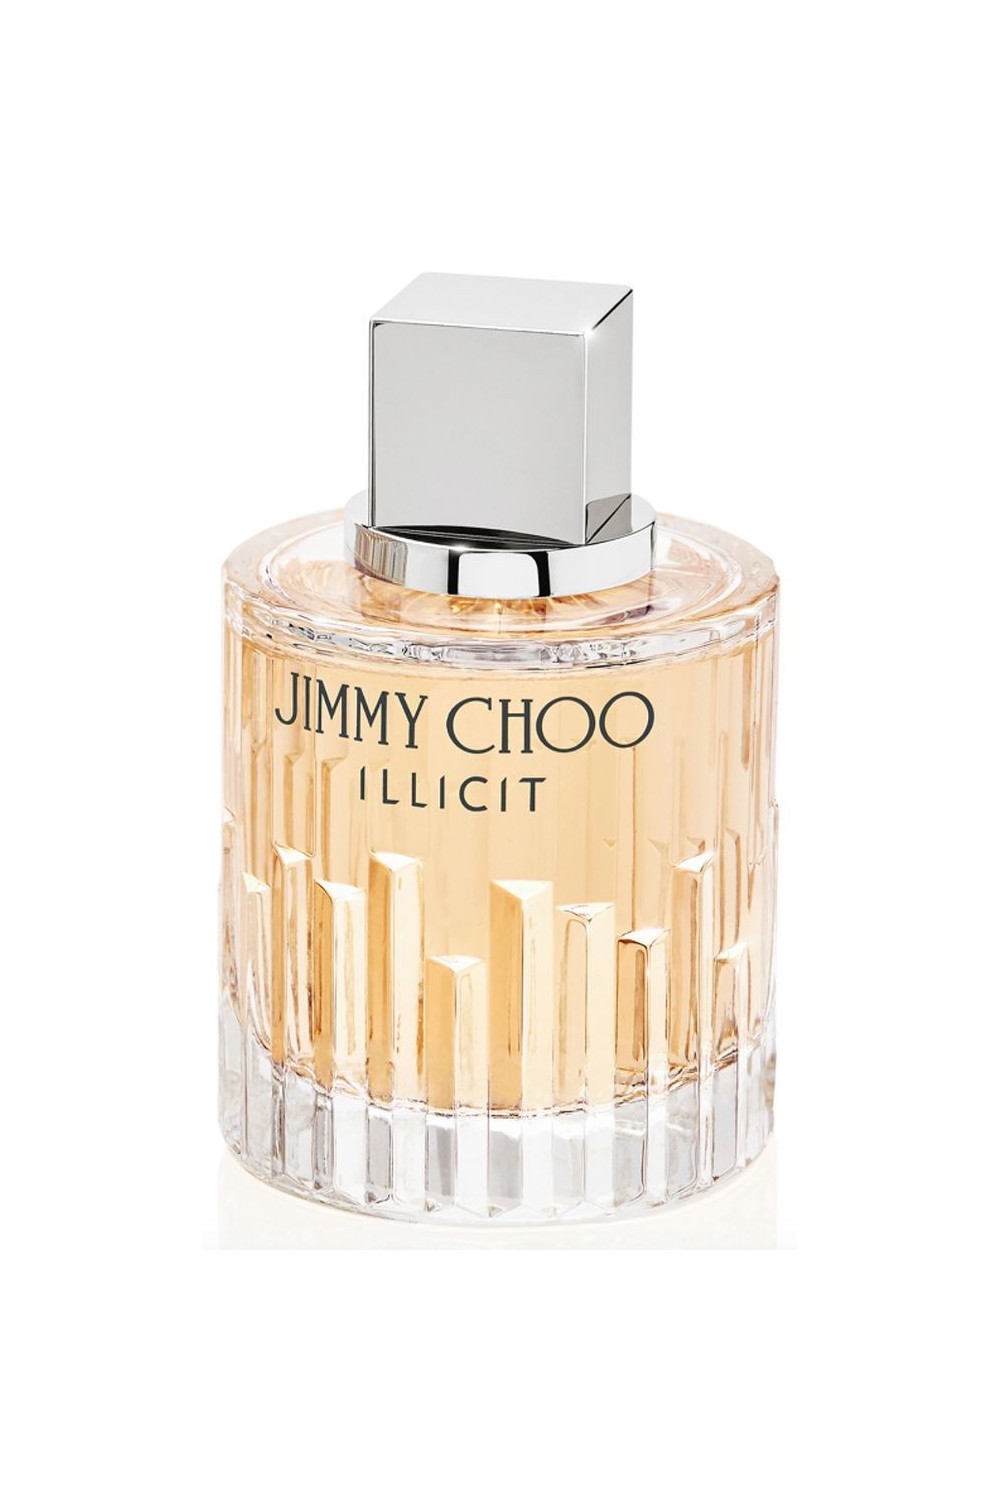 Jimmy Choo Illicit Eau De Perfume Spray 100ml